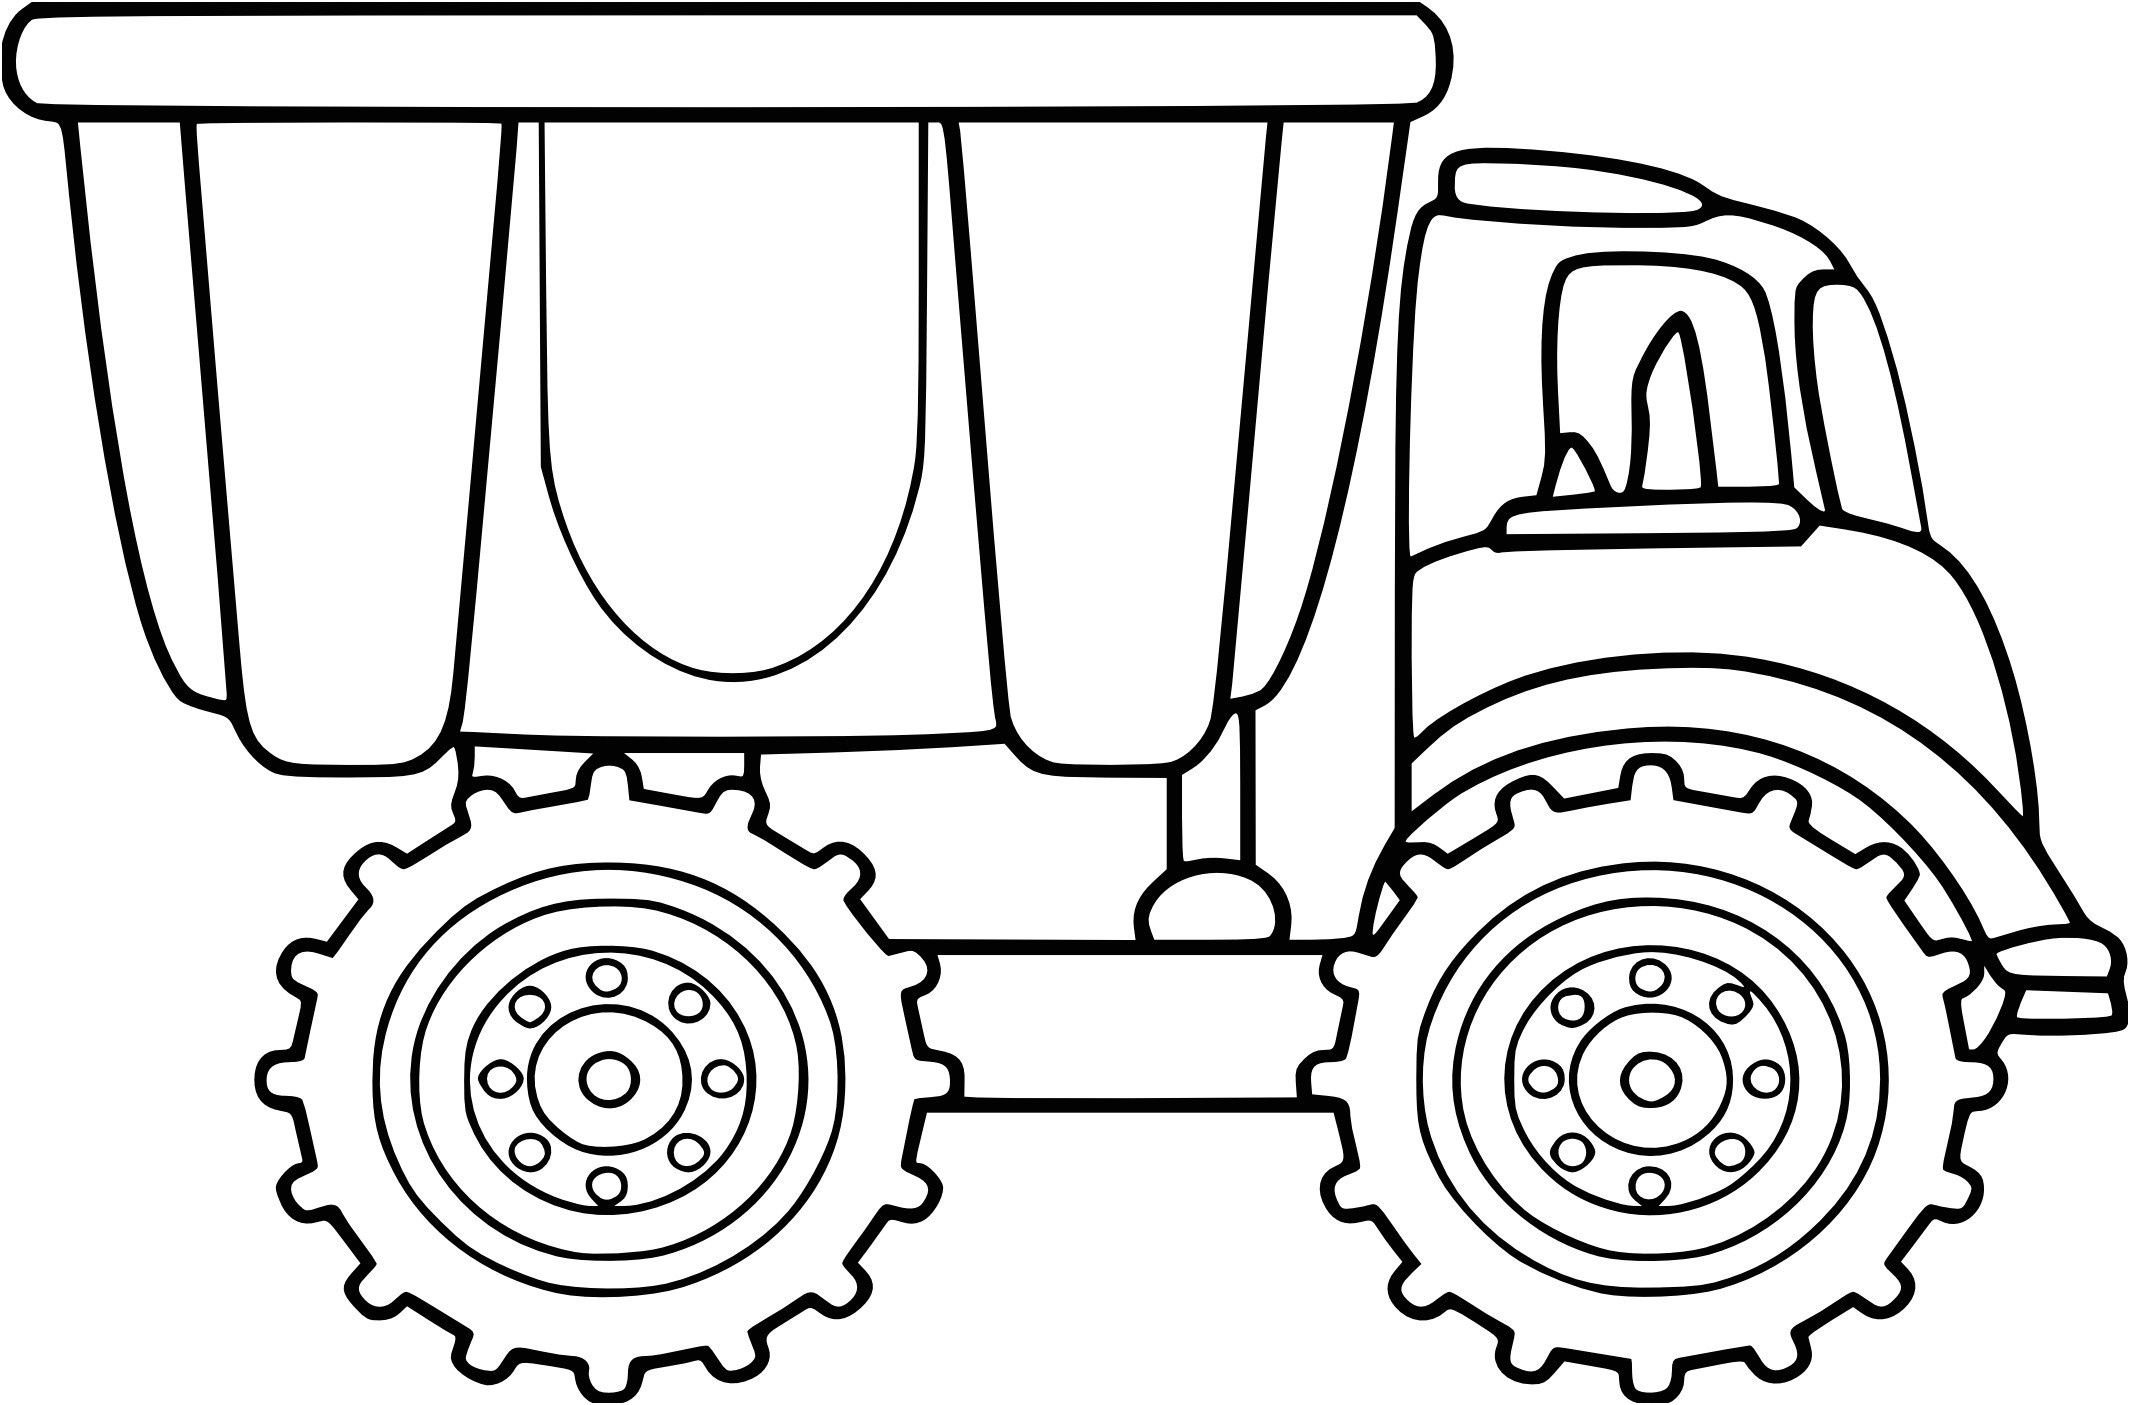 Raskraska для детей Traktor